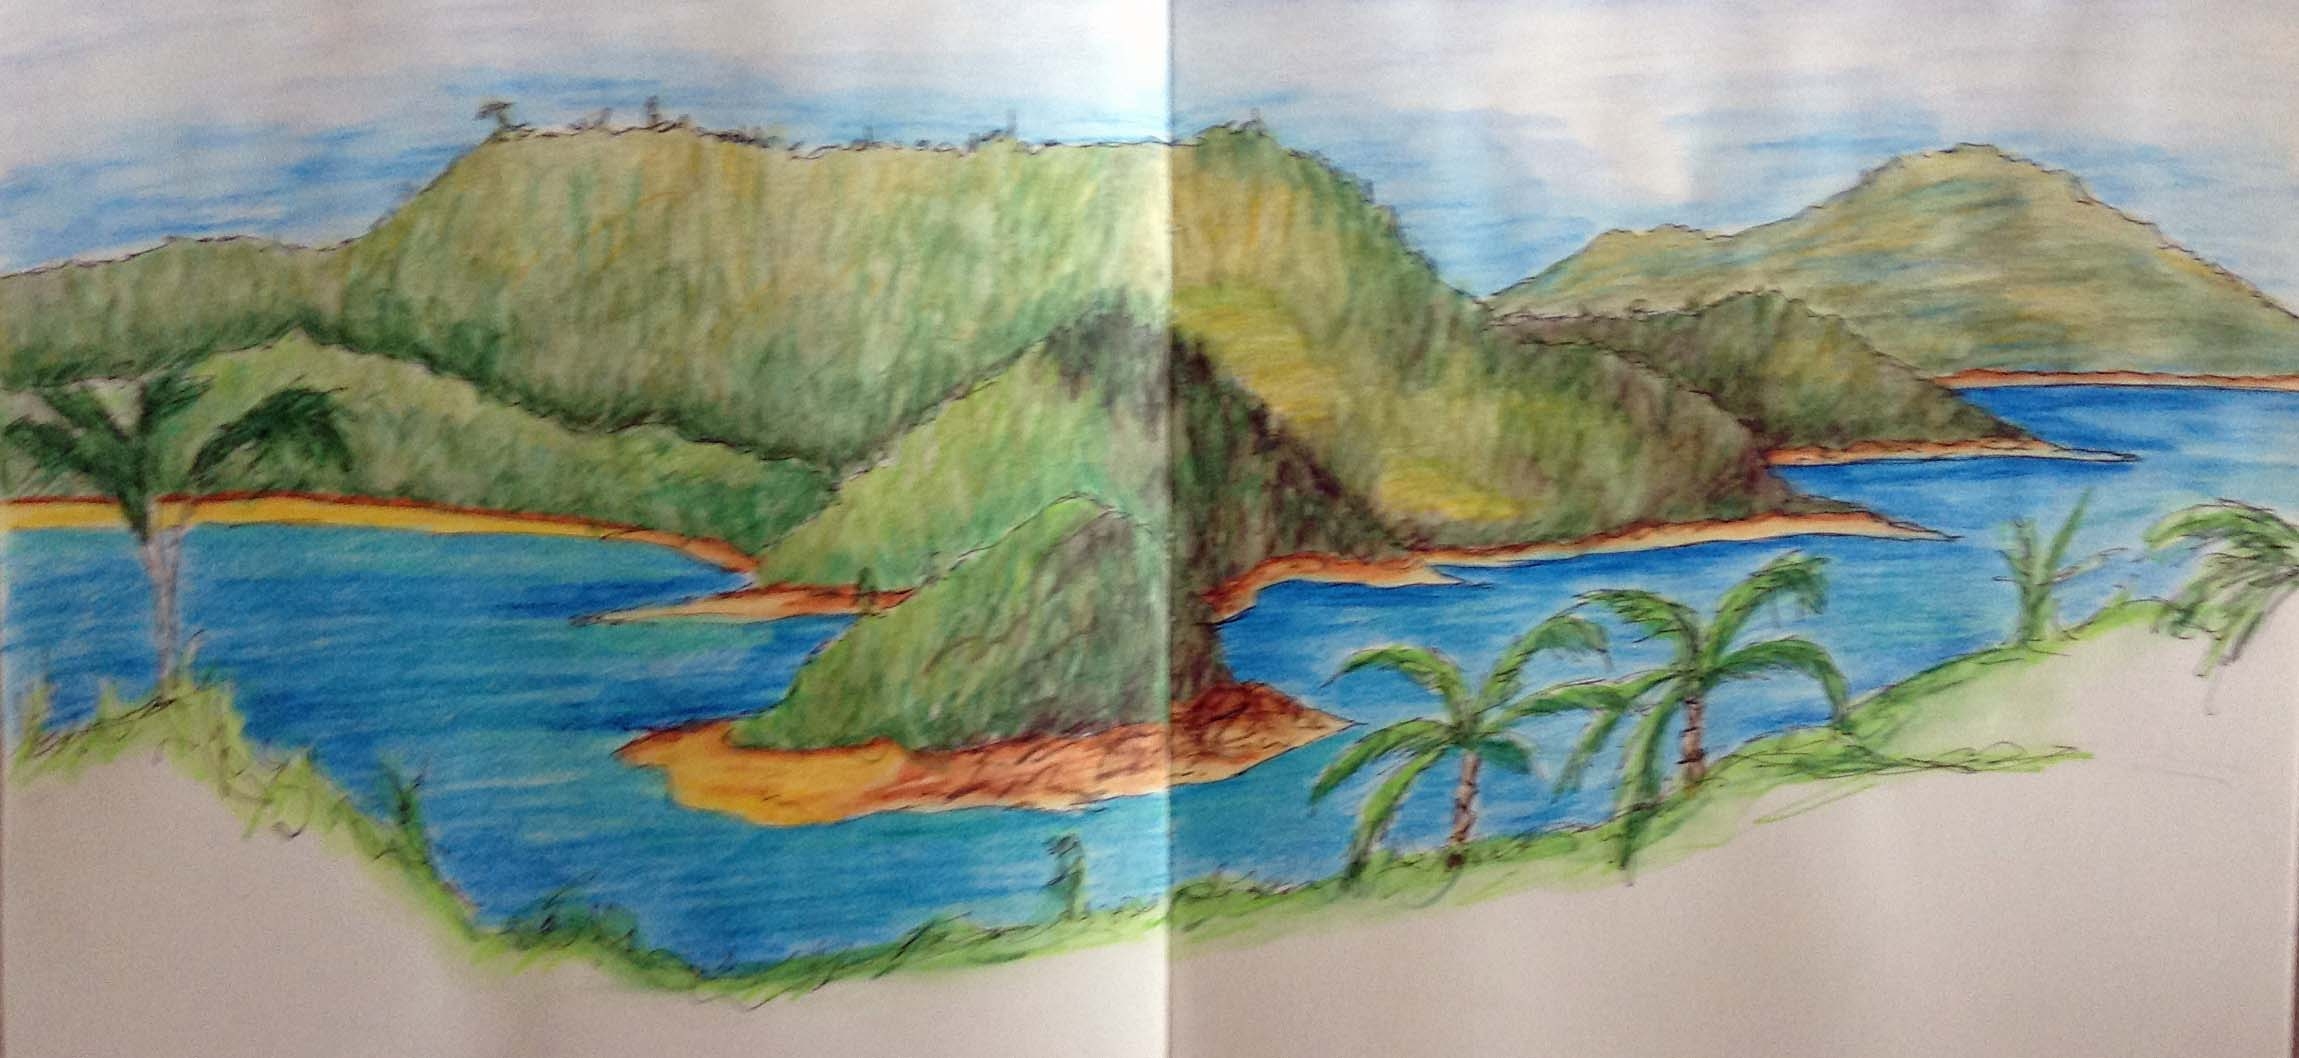 Астафьев весенний остров план. Весенний остров Астафьев рисунок. Весенний остров. Остров рисунок карандашом.